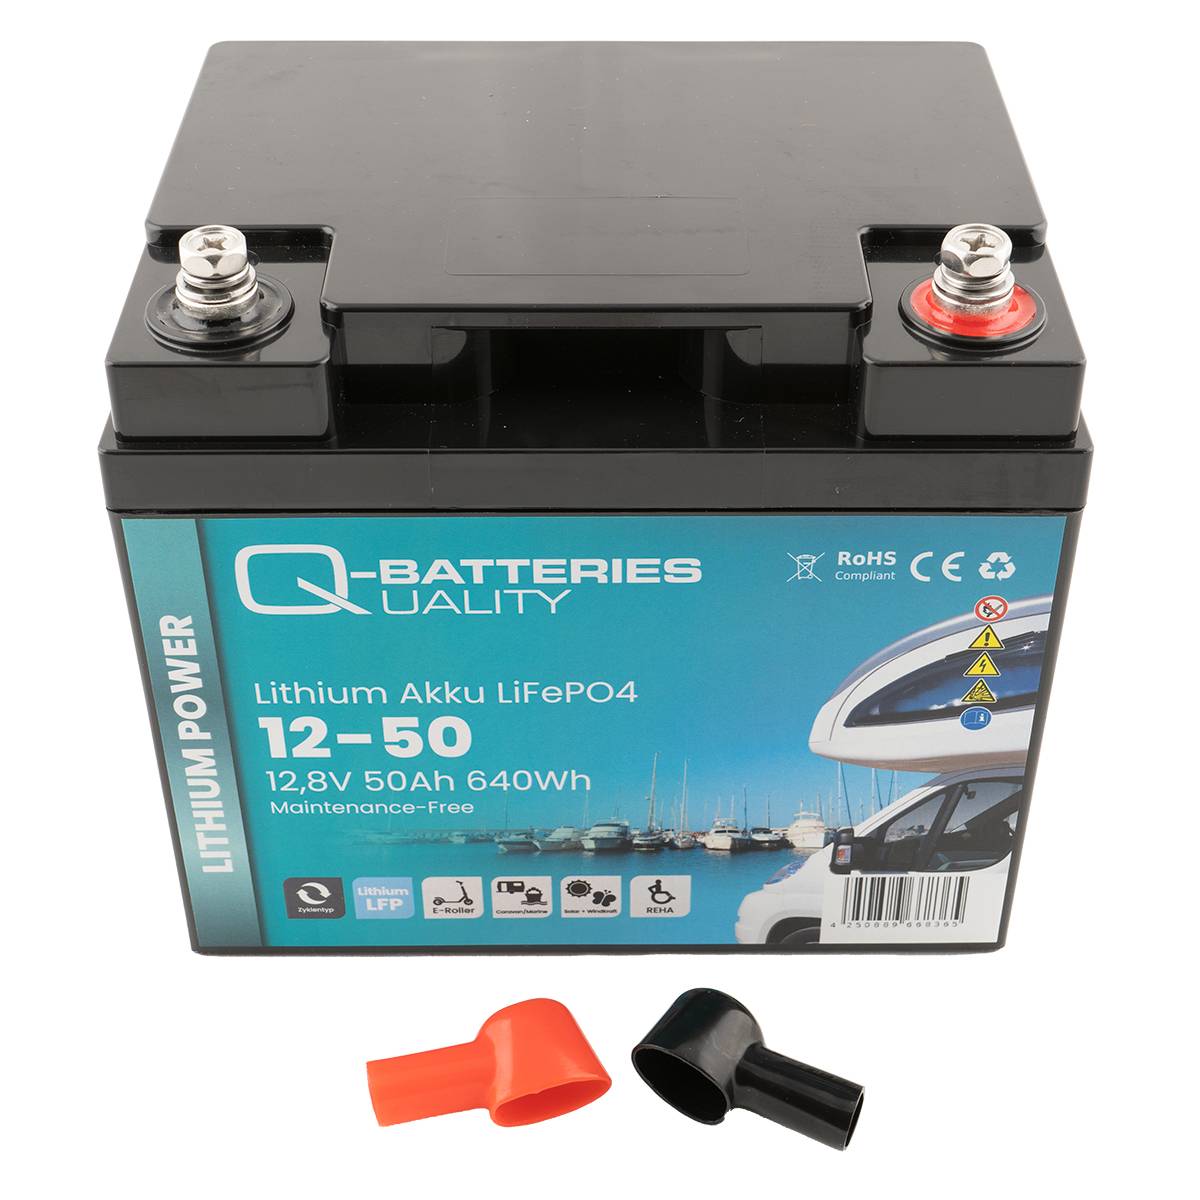 Q-Batteries Lithium Akku 12-50 12,8V 50Ah 640Wh LiFePO4 Batterie  